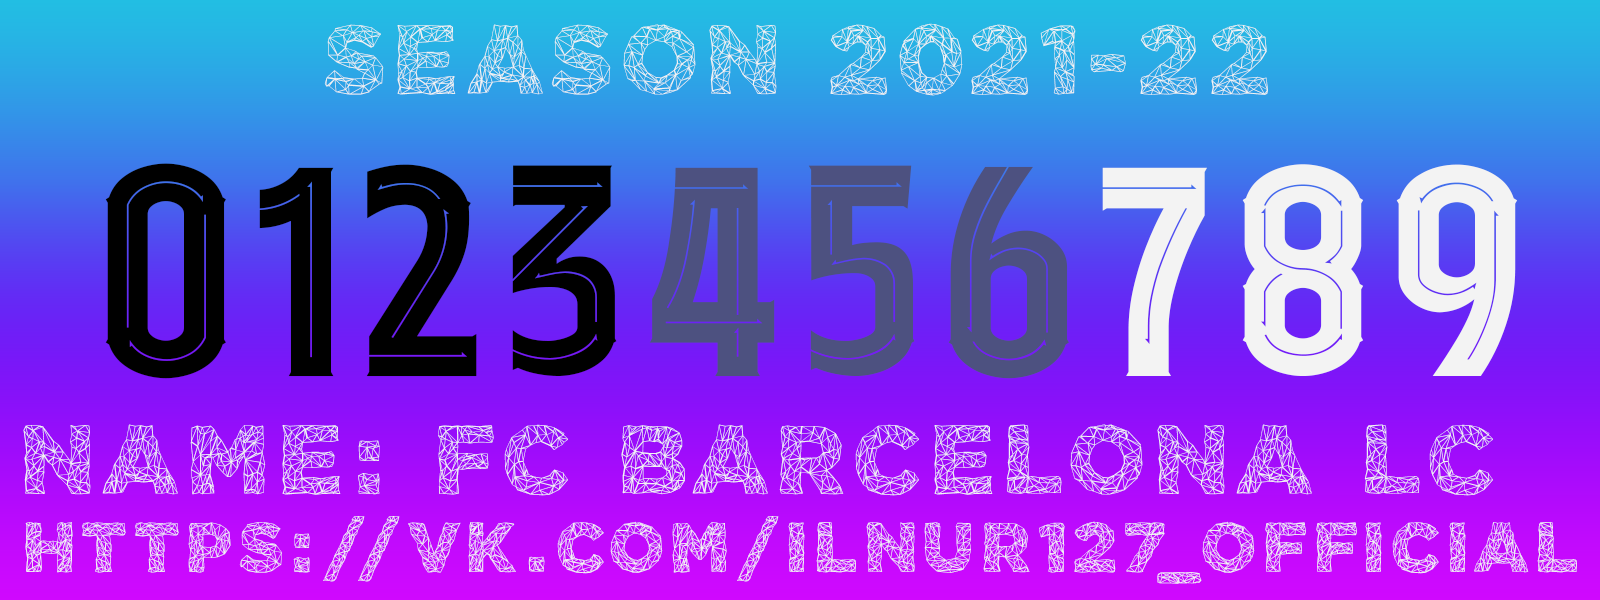 FC Barcelona LC 2021-22 (kitnumbers).png